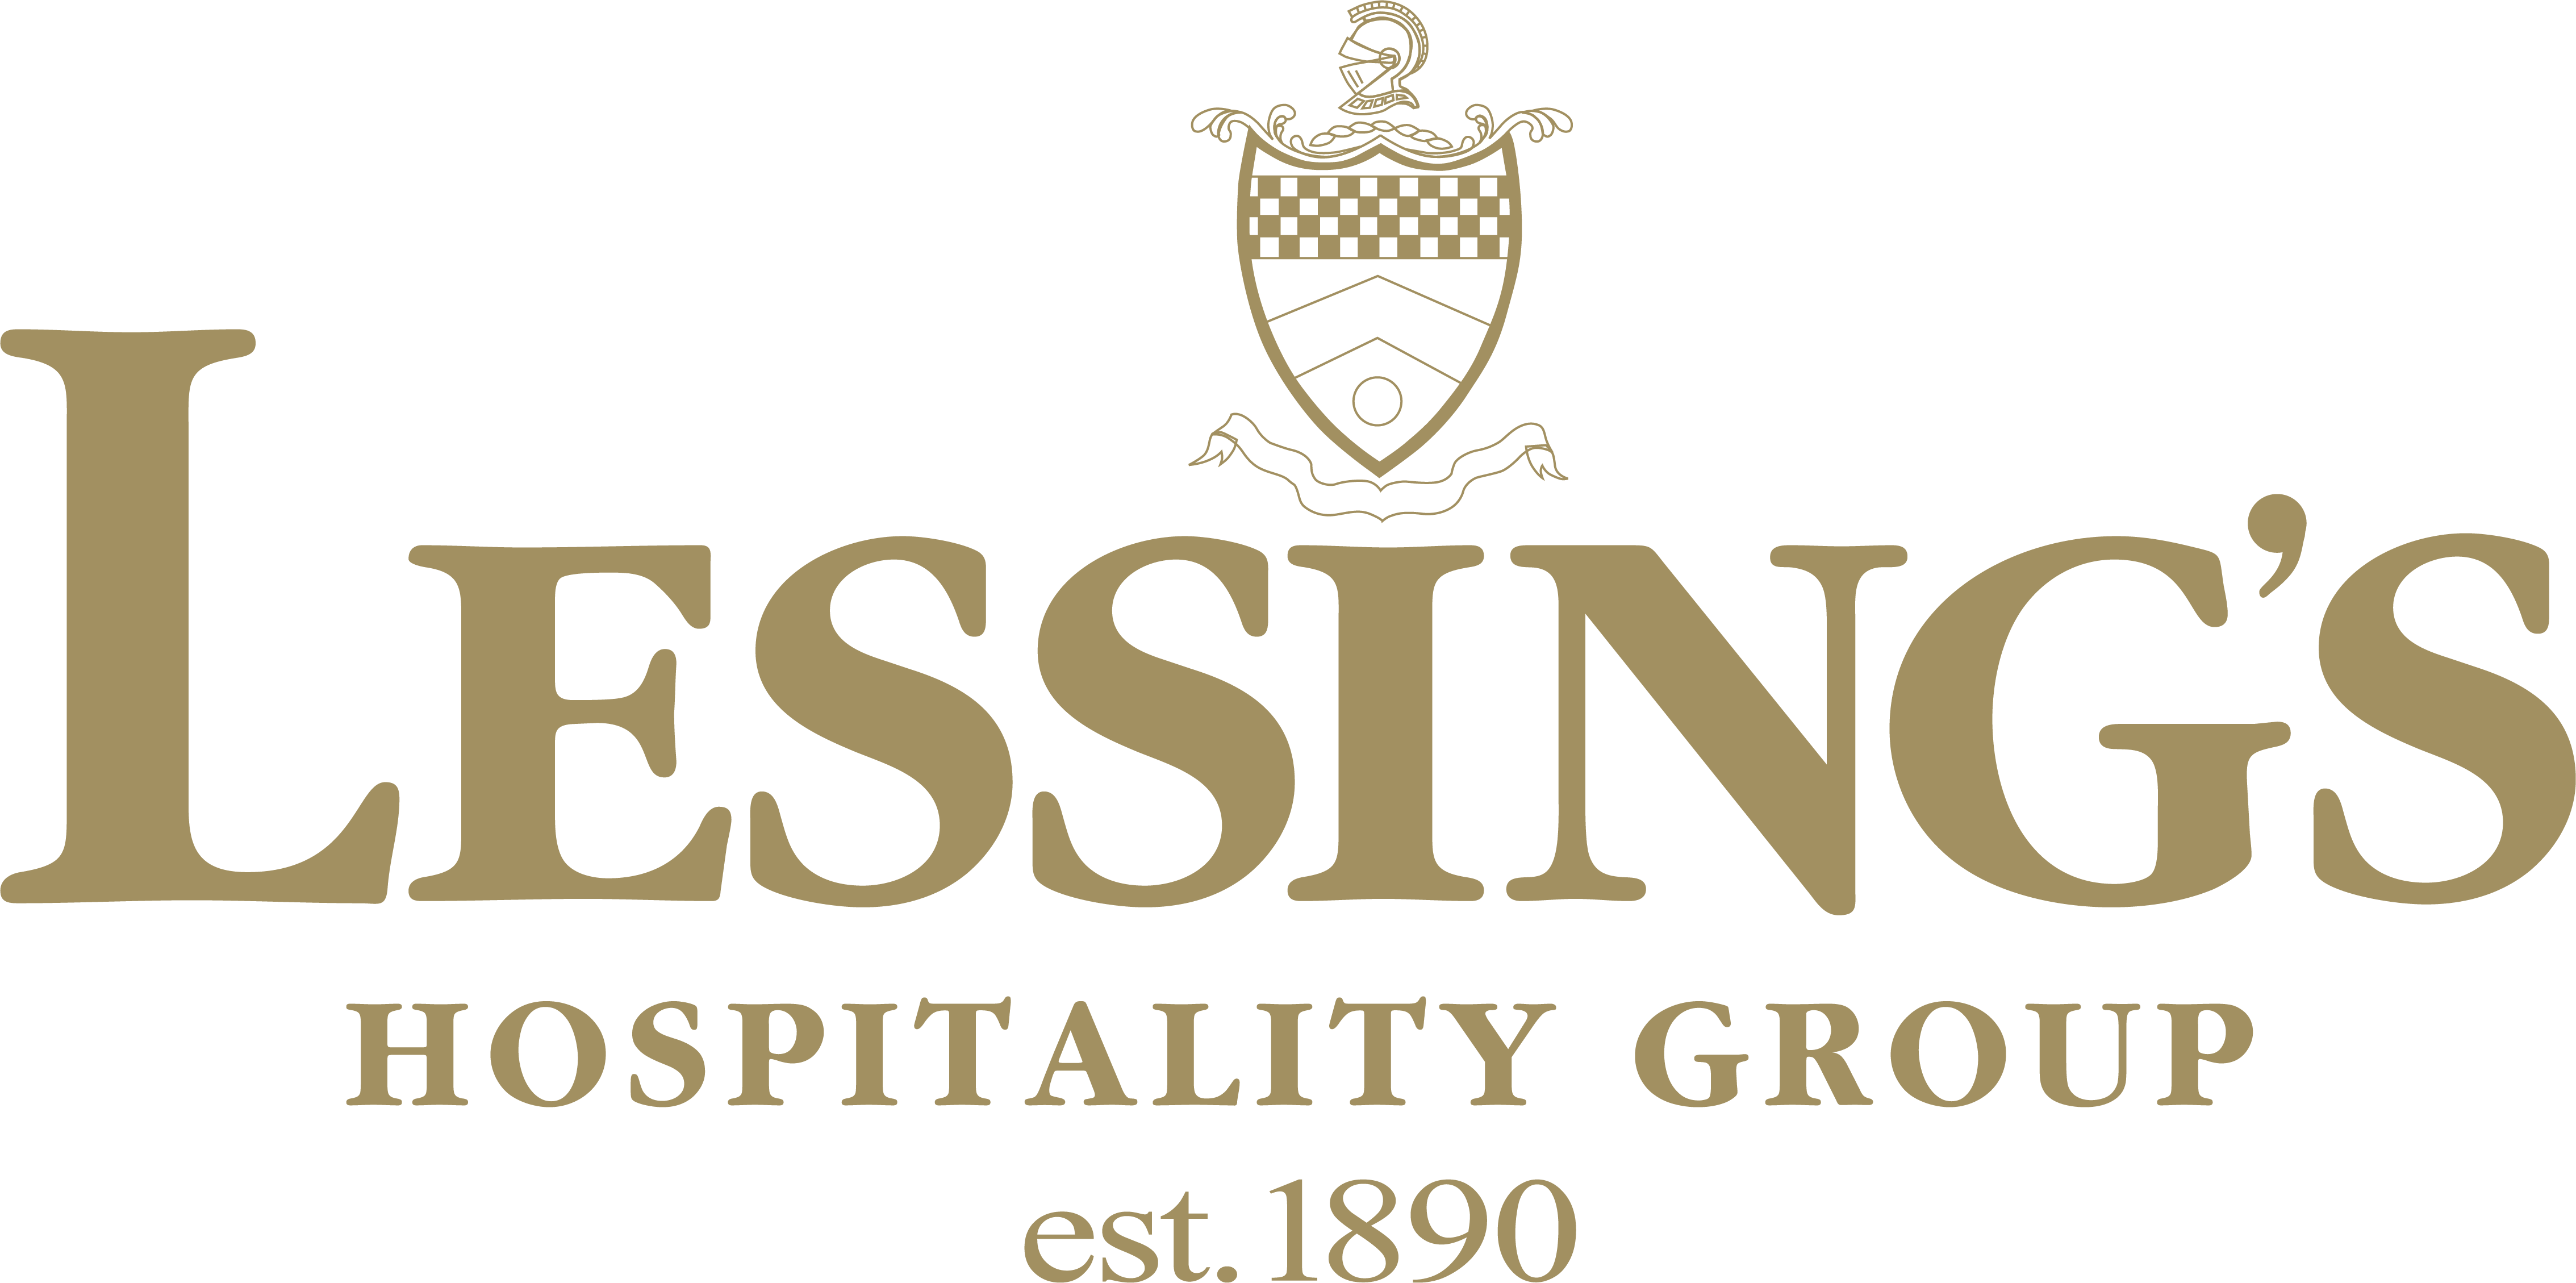 Lessing's Hospitality Group Company Logo